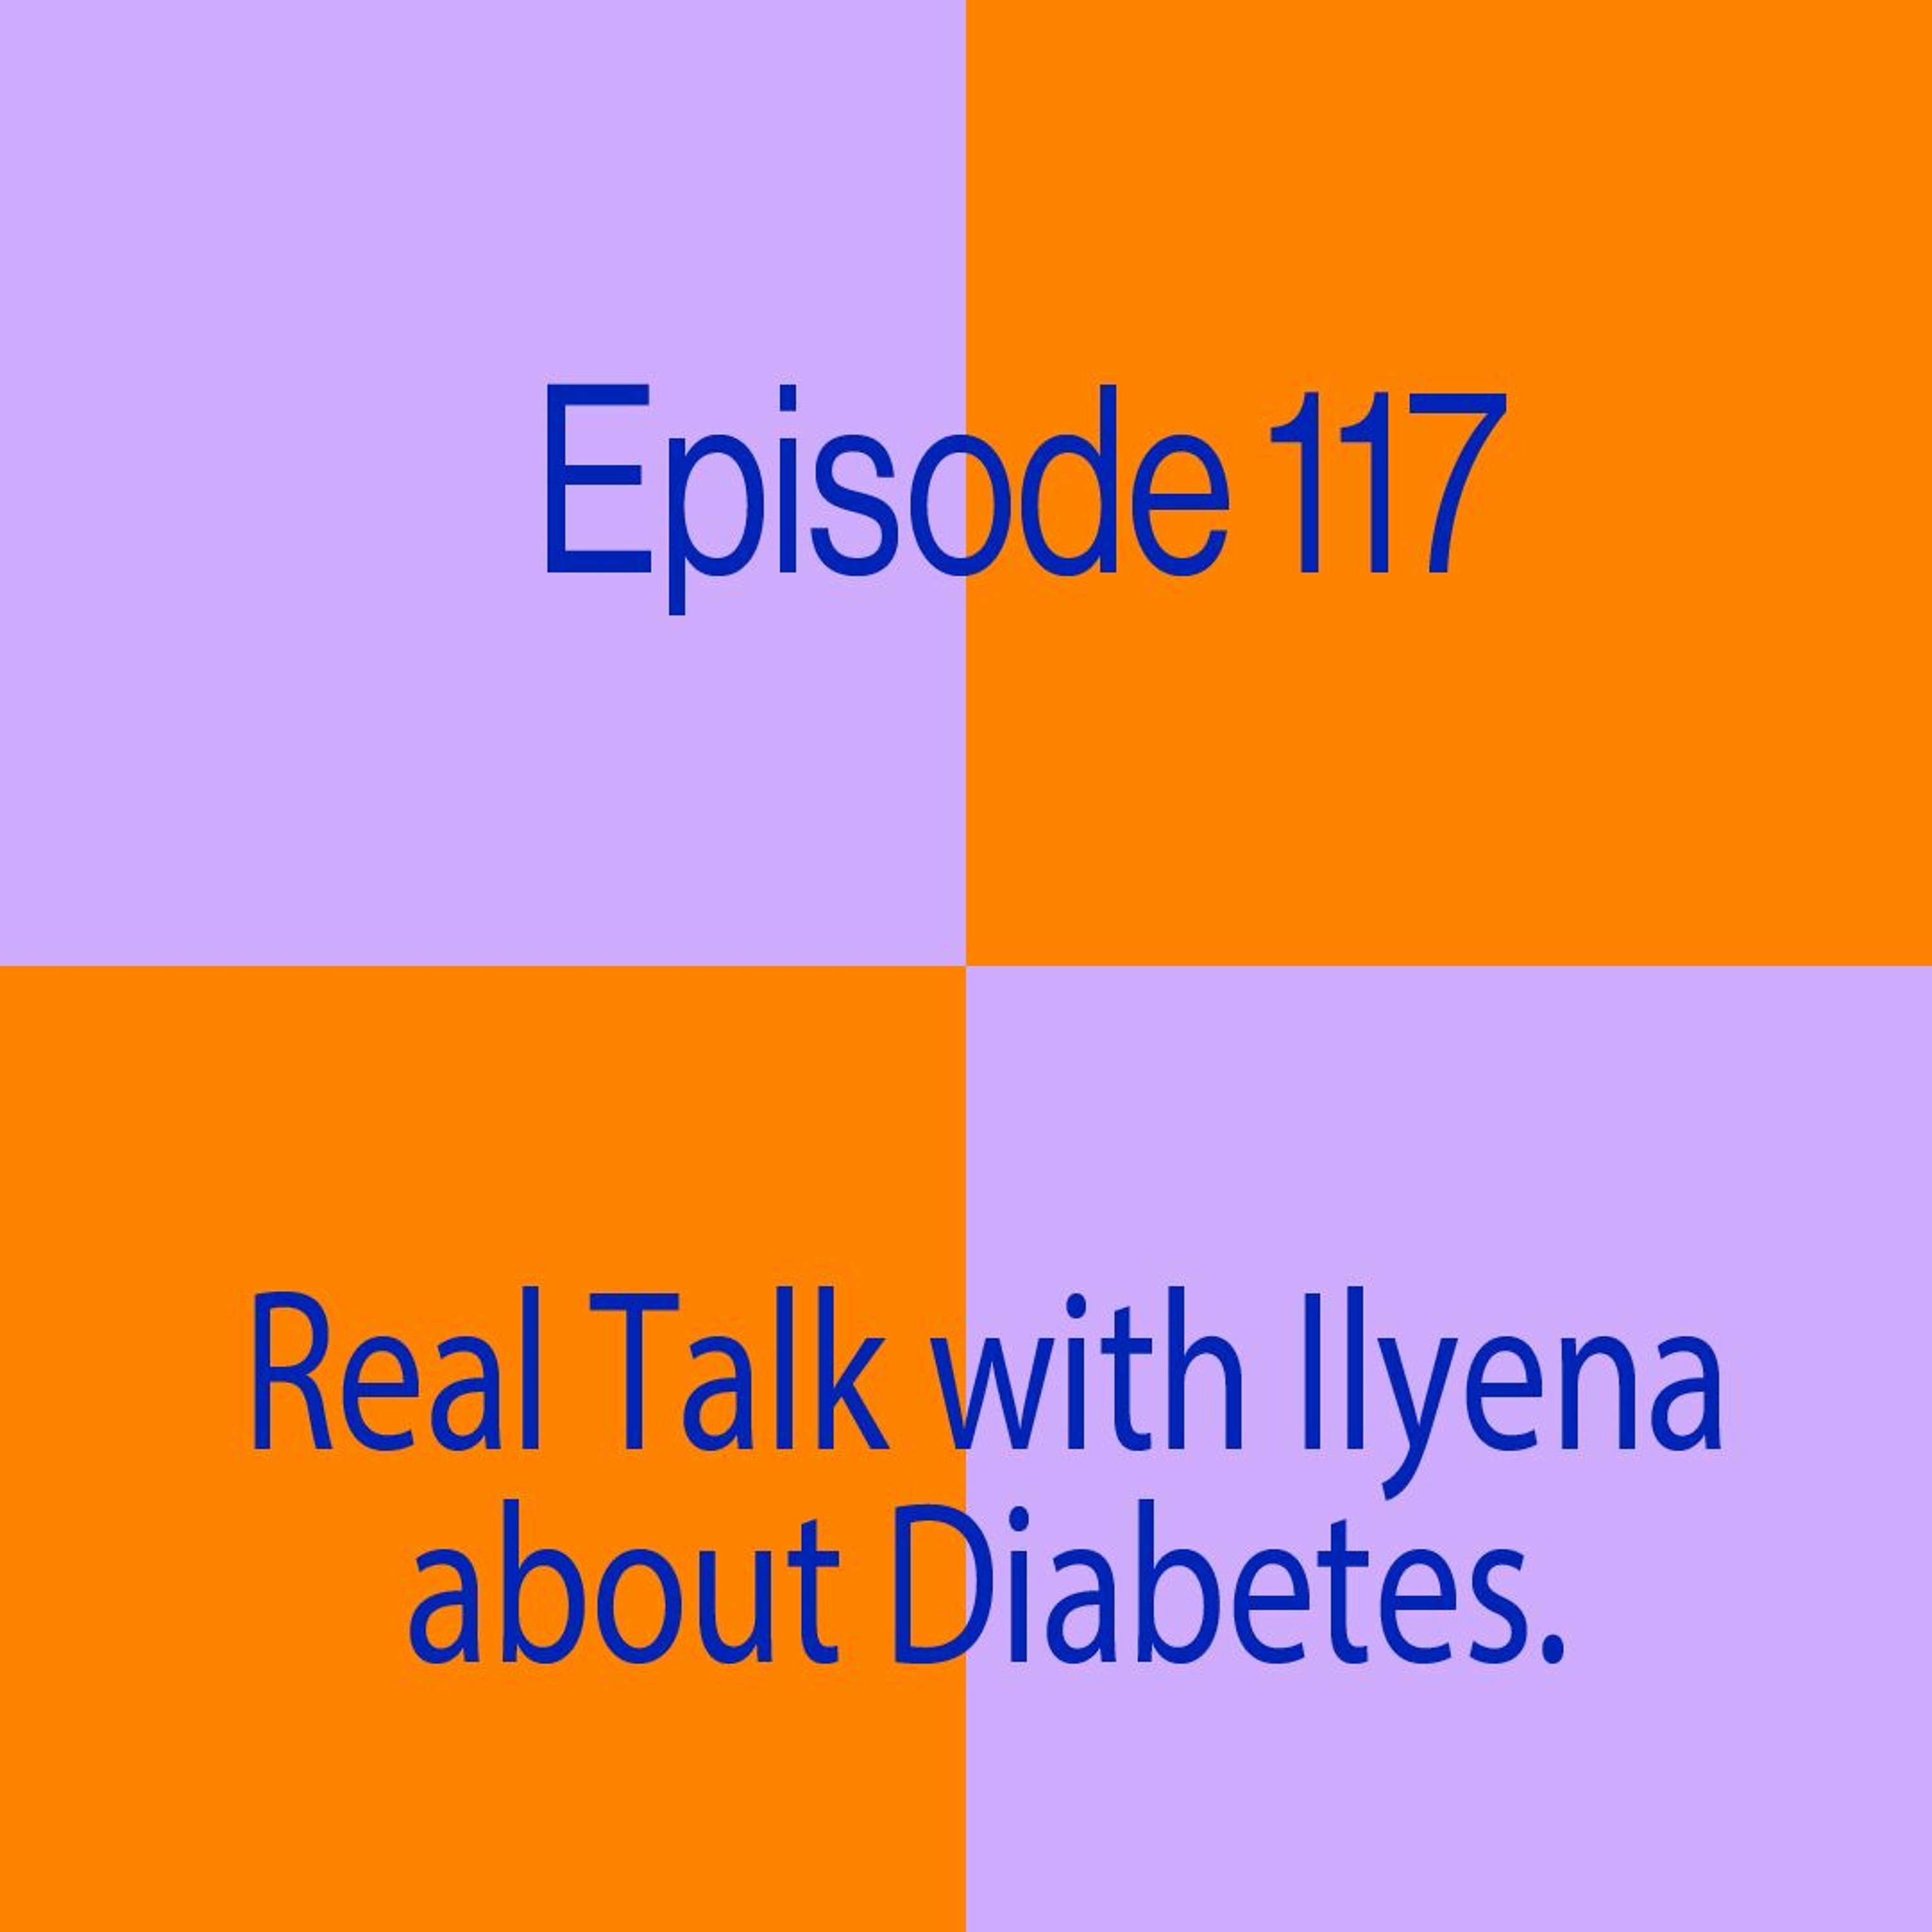 Episode 117: Real Talk with Ilyena about Diabetes